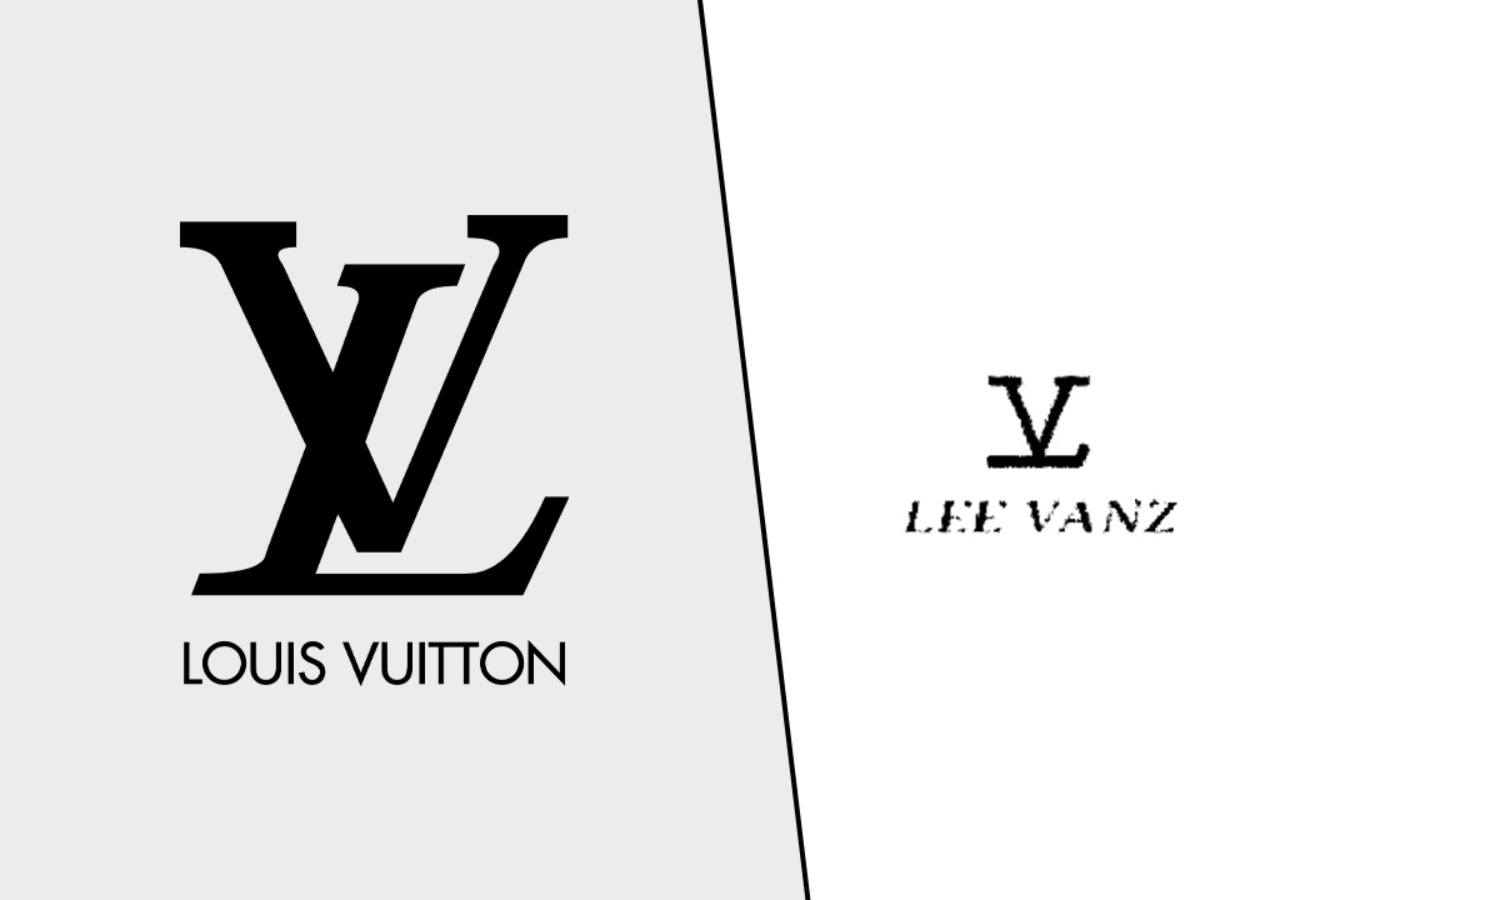 Cartier Beats Out Louis Vuitton in Fight Over VENDÔME Trademark